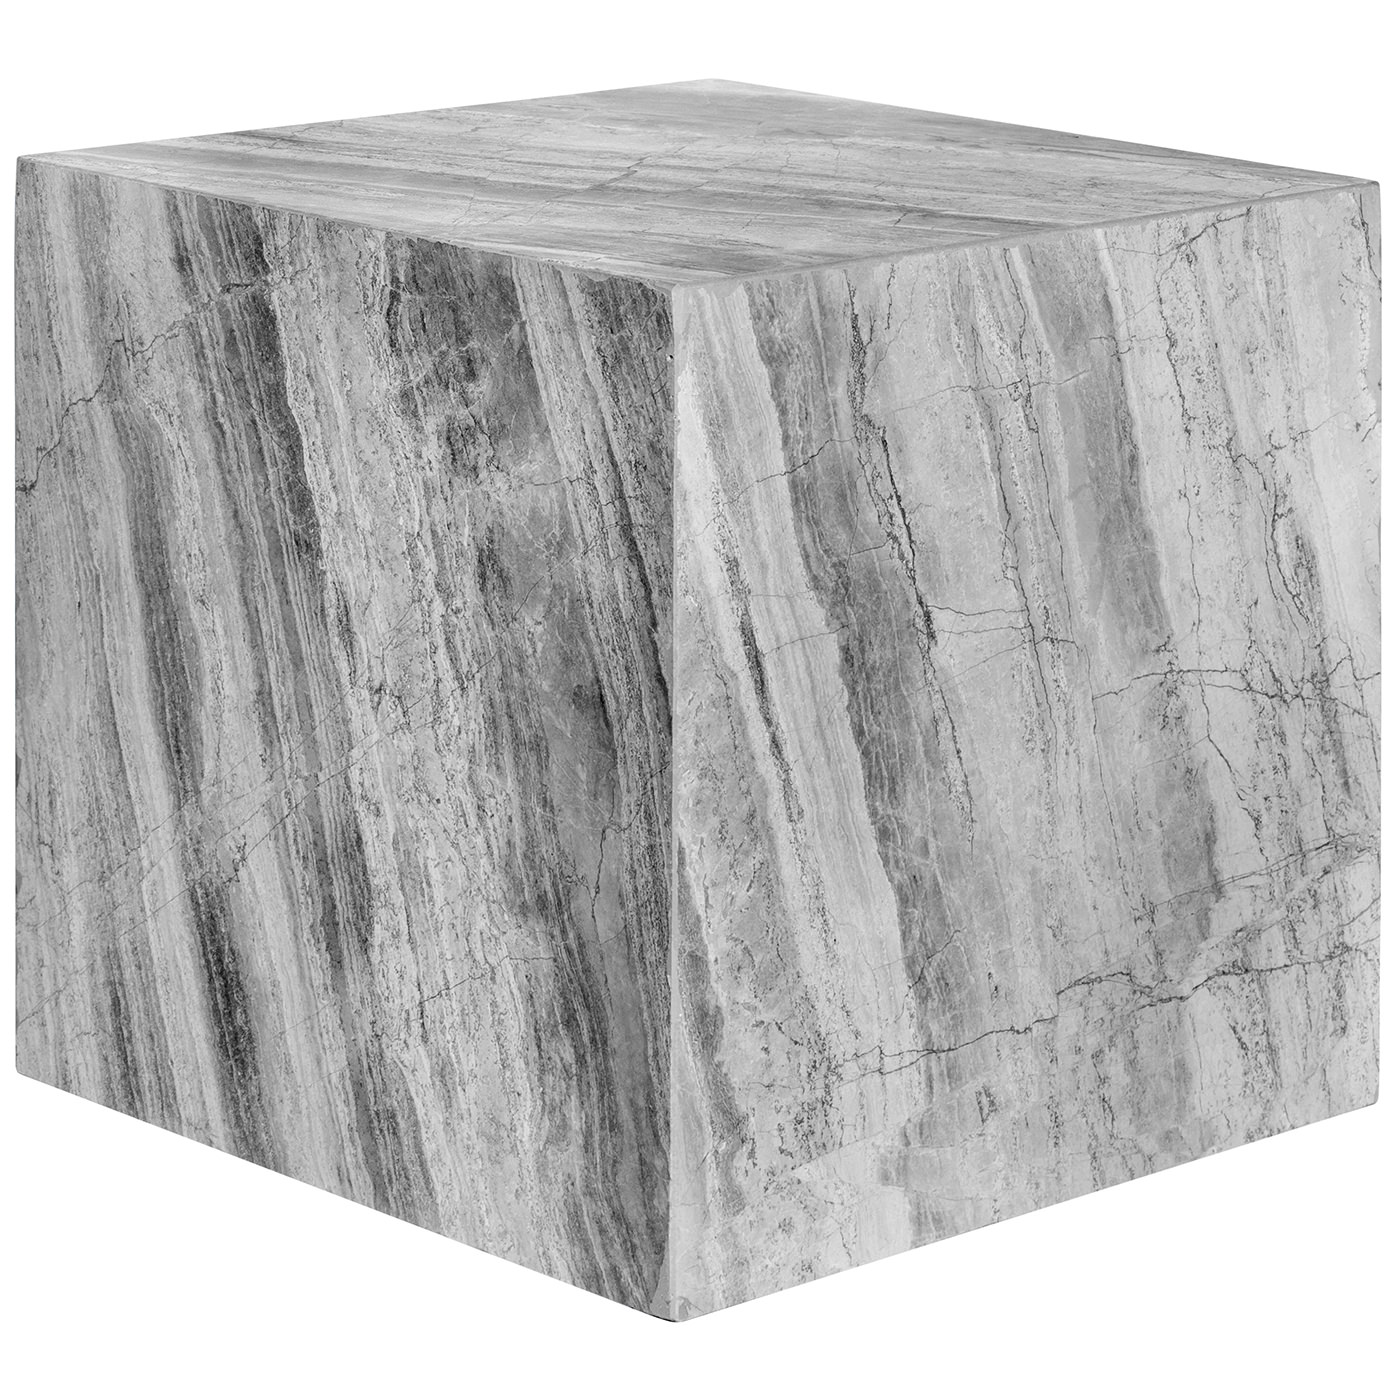 TI 1739 411 12 – Cubic Coffee Table Marble Grey River 50x50x50cm (2)